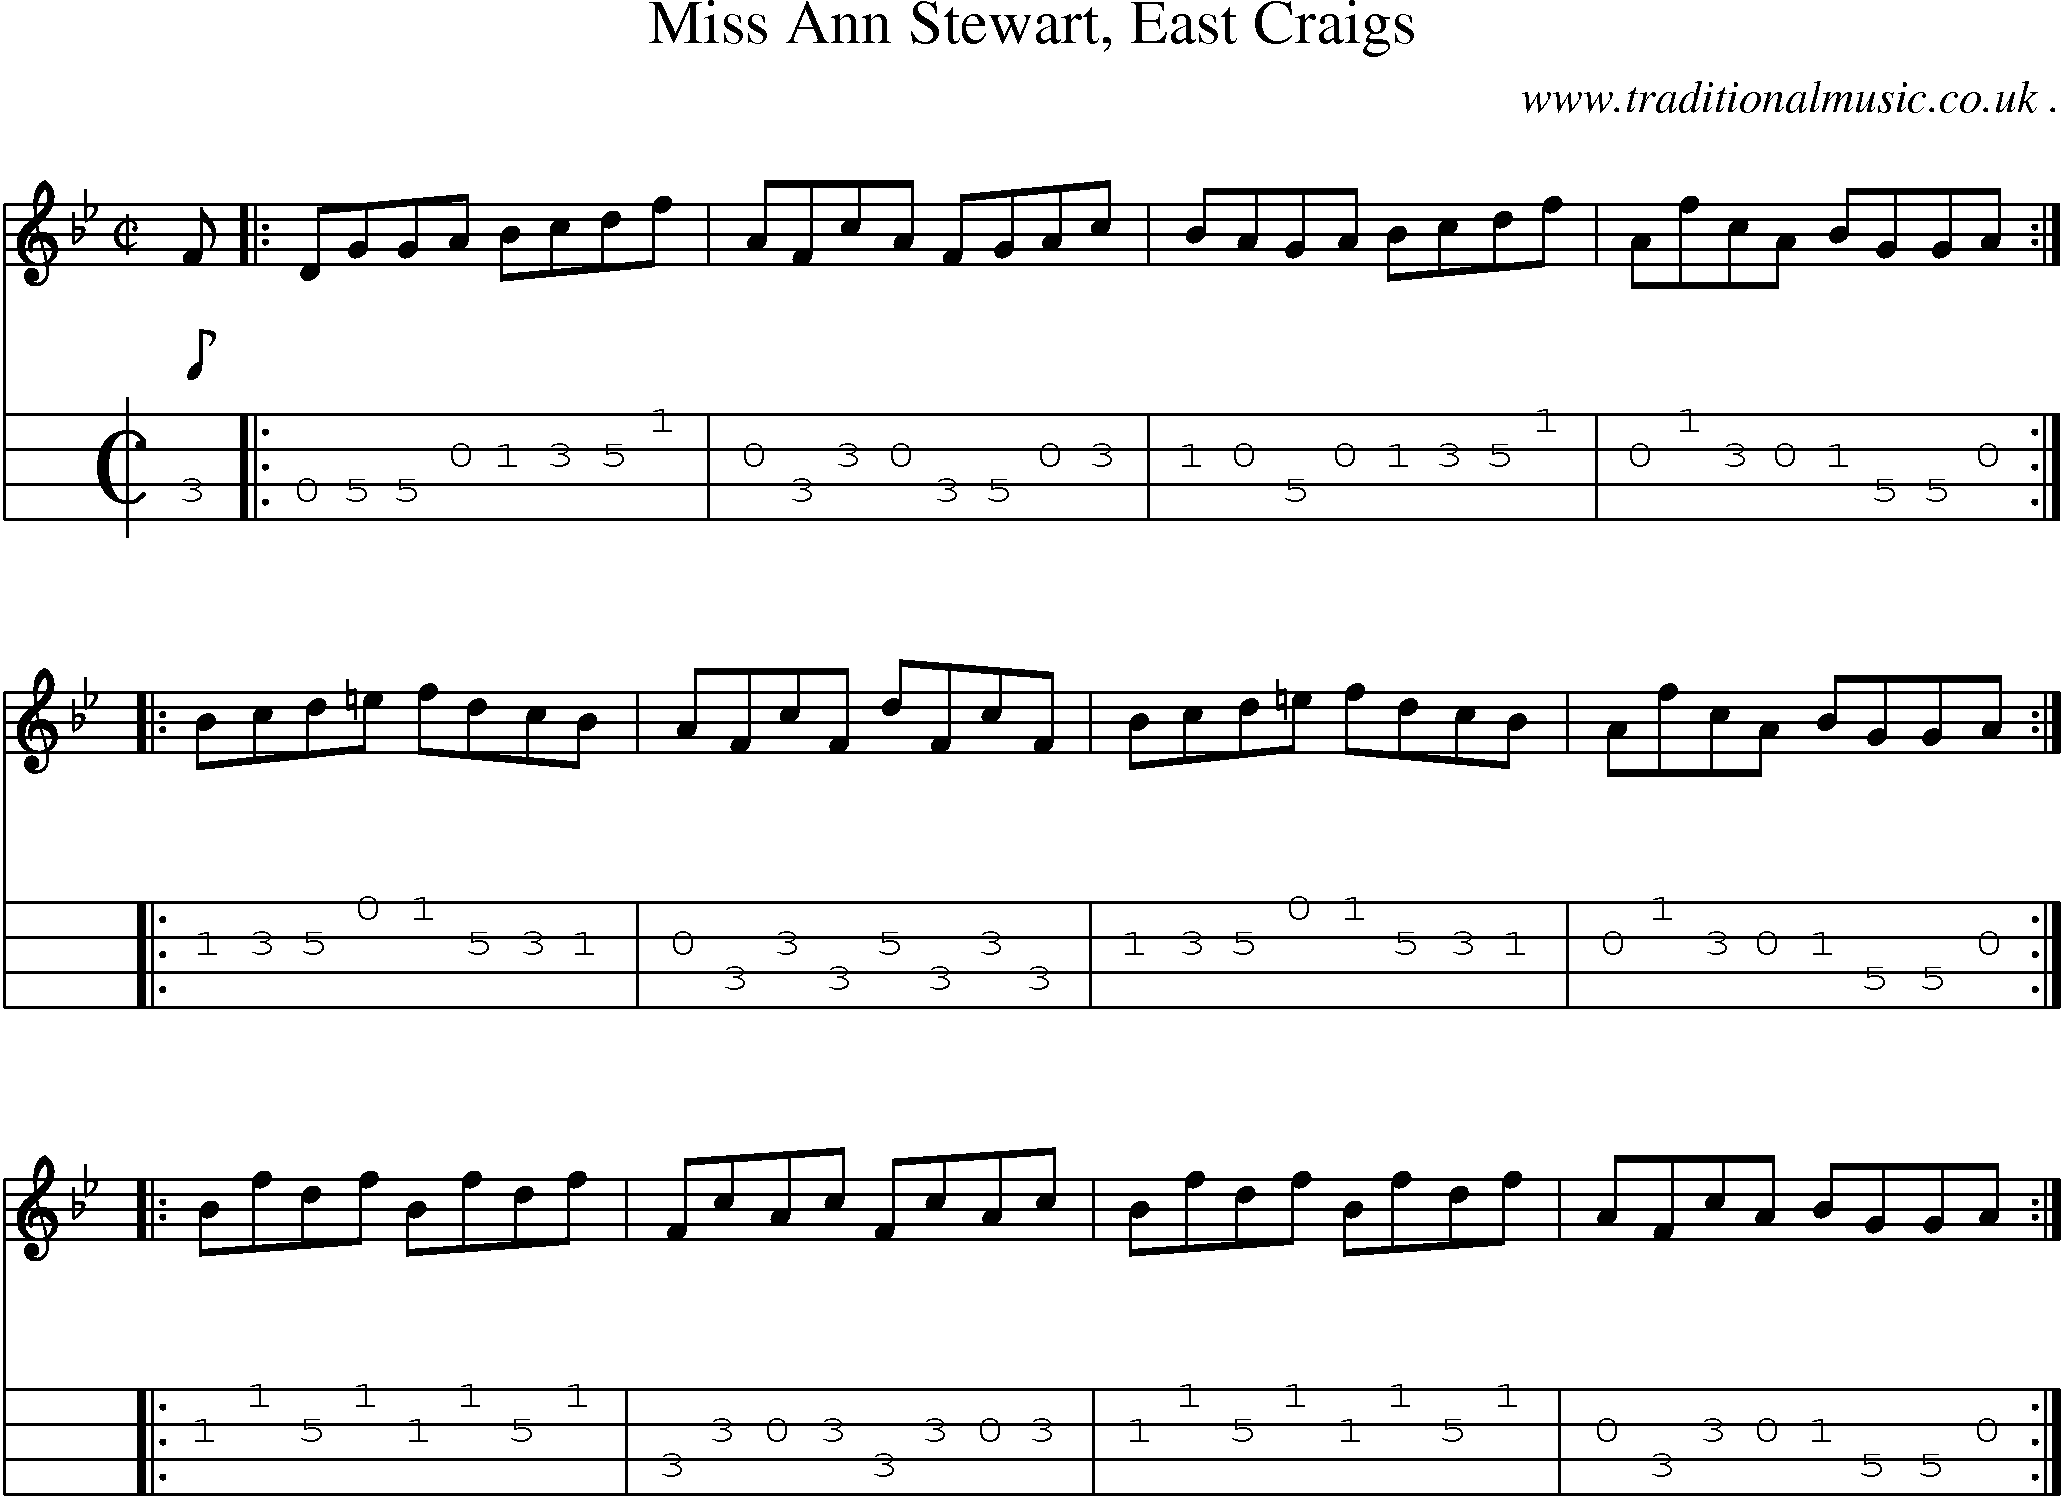 Sheet-music  score, Chords and Mandolin Tabs for Miss Ann Stewart East Craigs